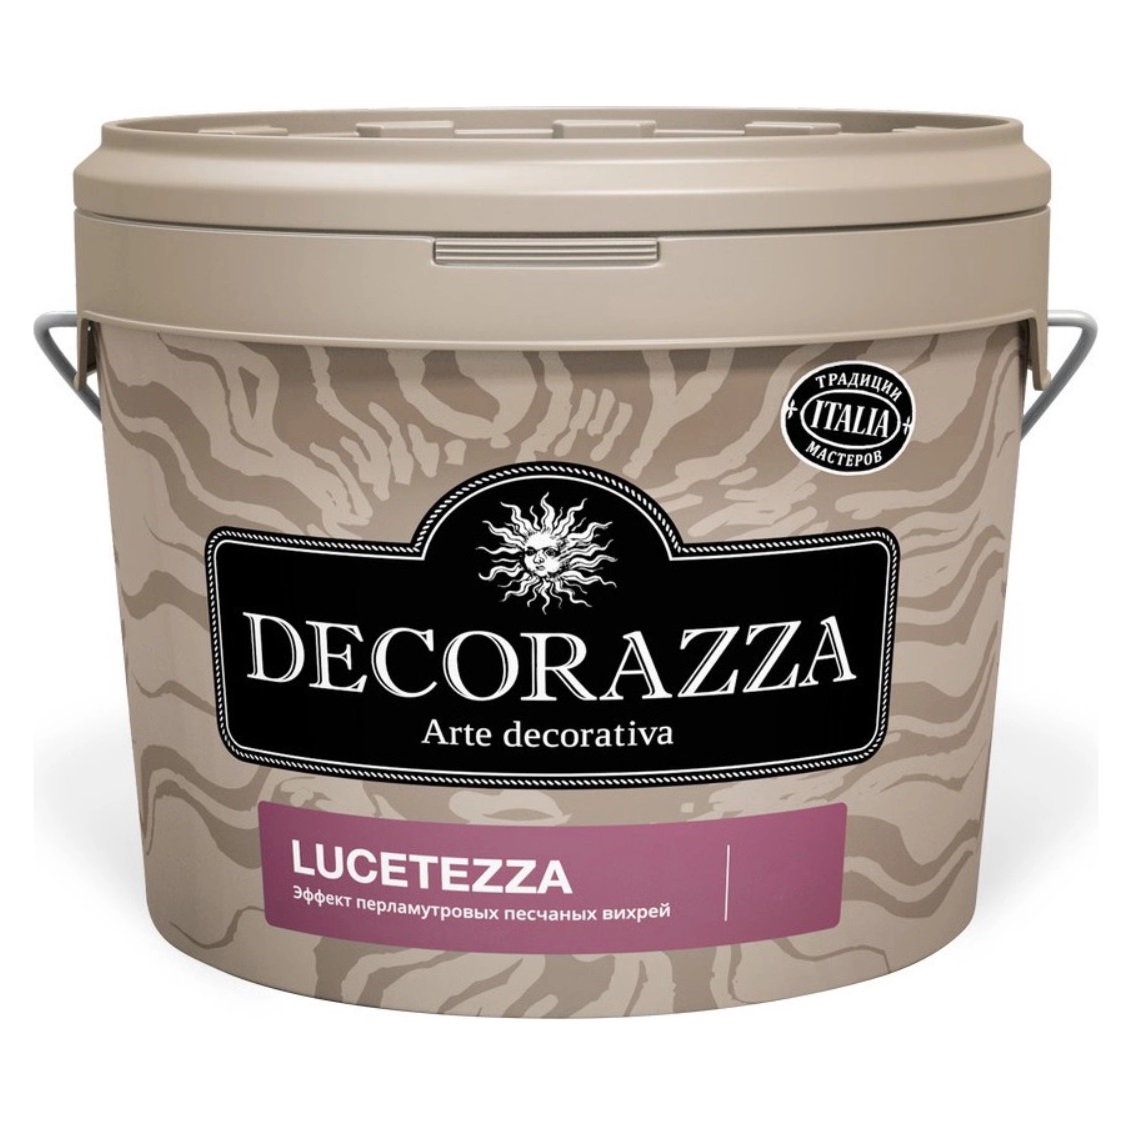 Декоративная краска Decorazza lucetezza база oro 5.0кг краска decorazza lucetezza nova lcn 001 5 л